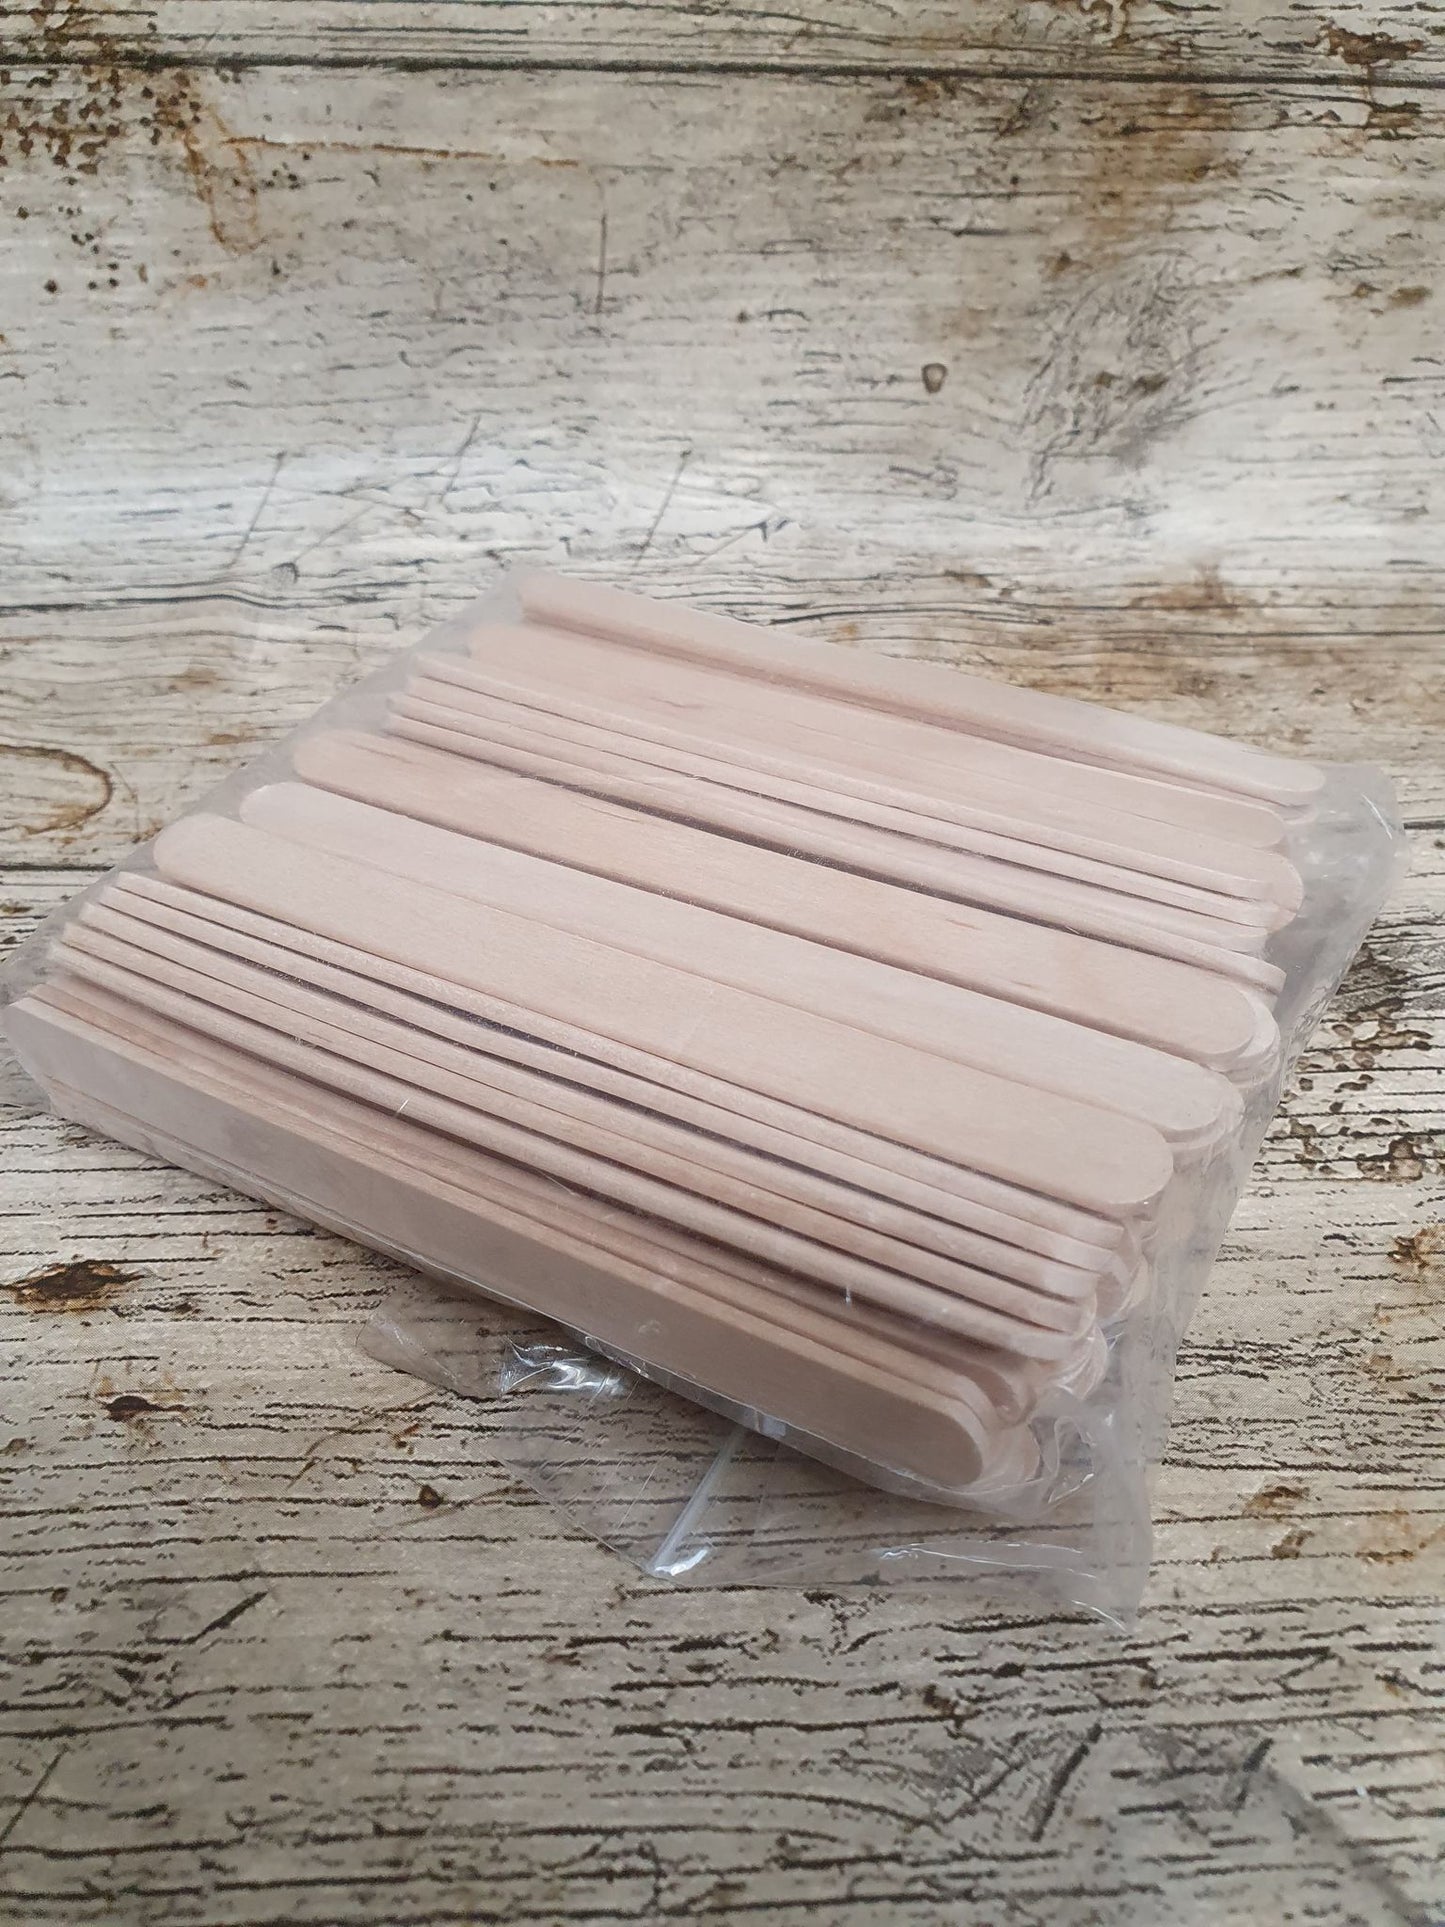 Wooden Mixing Sticks - Long